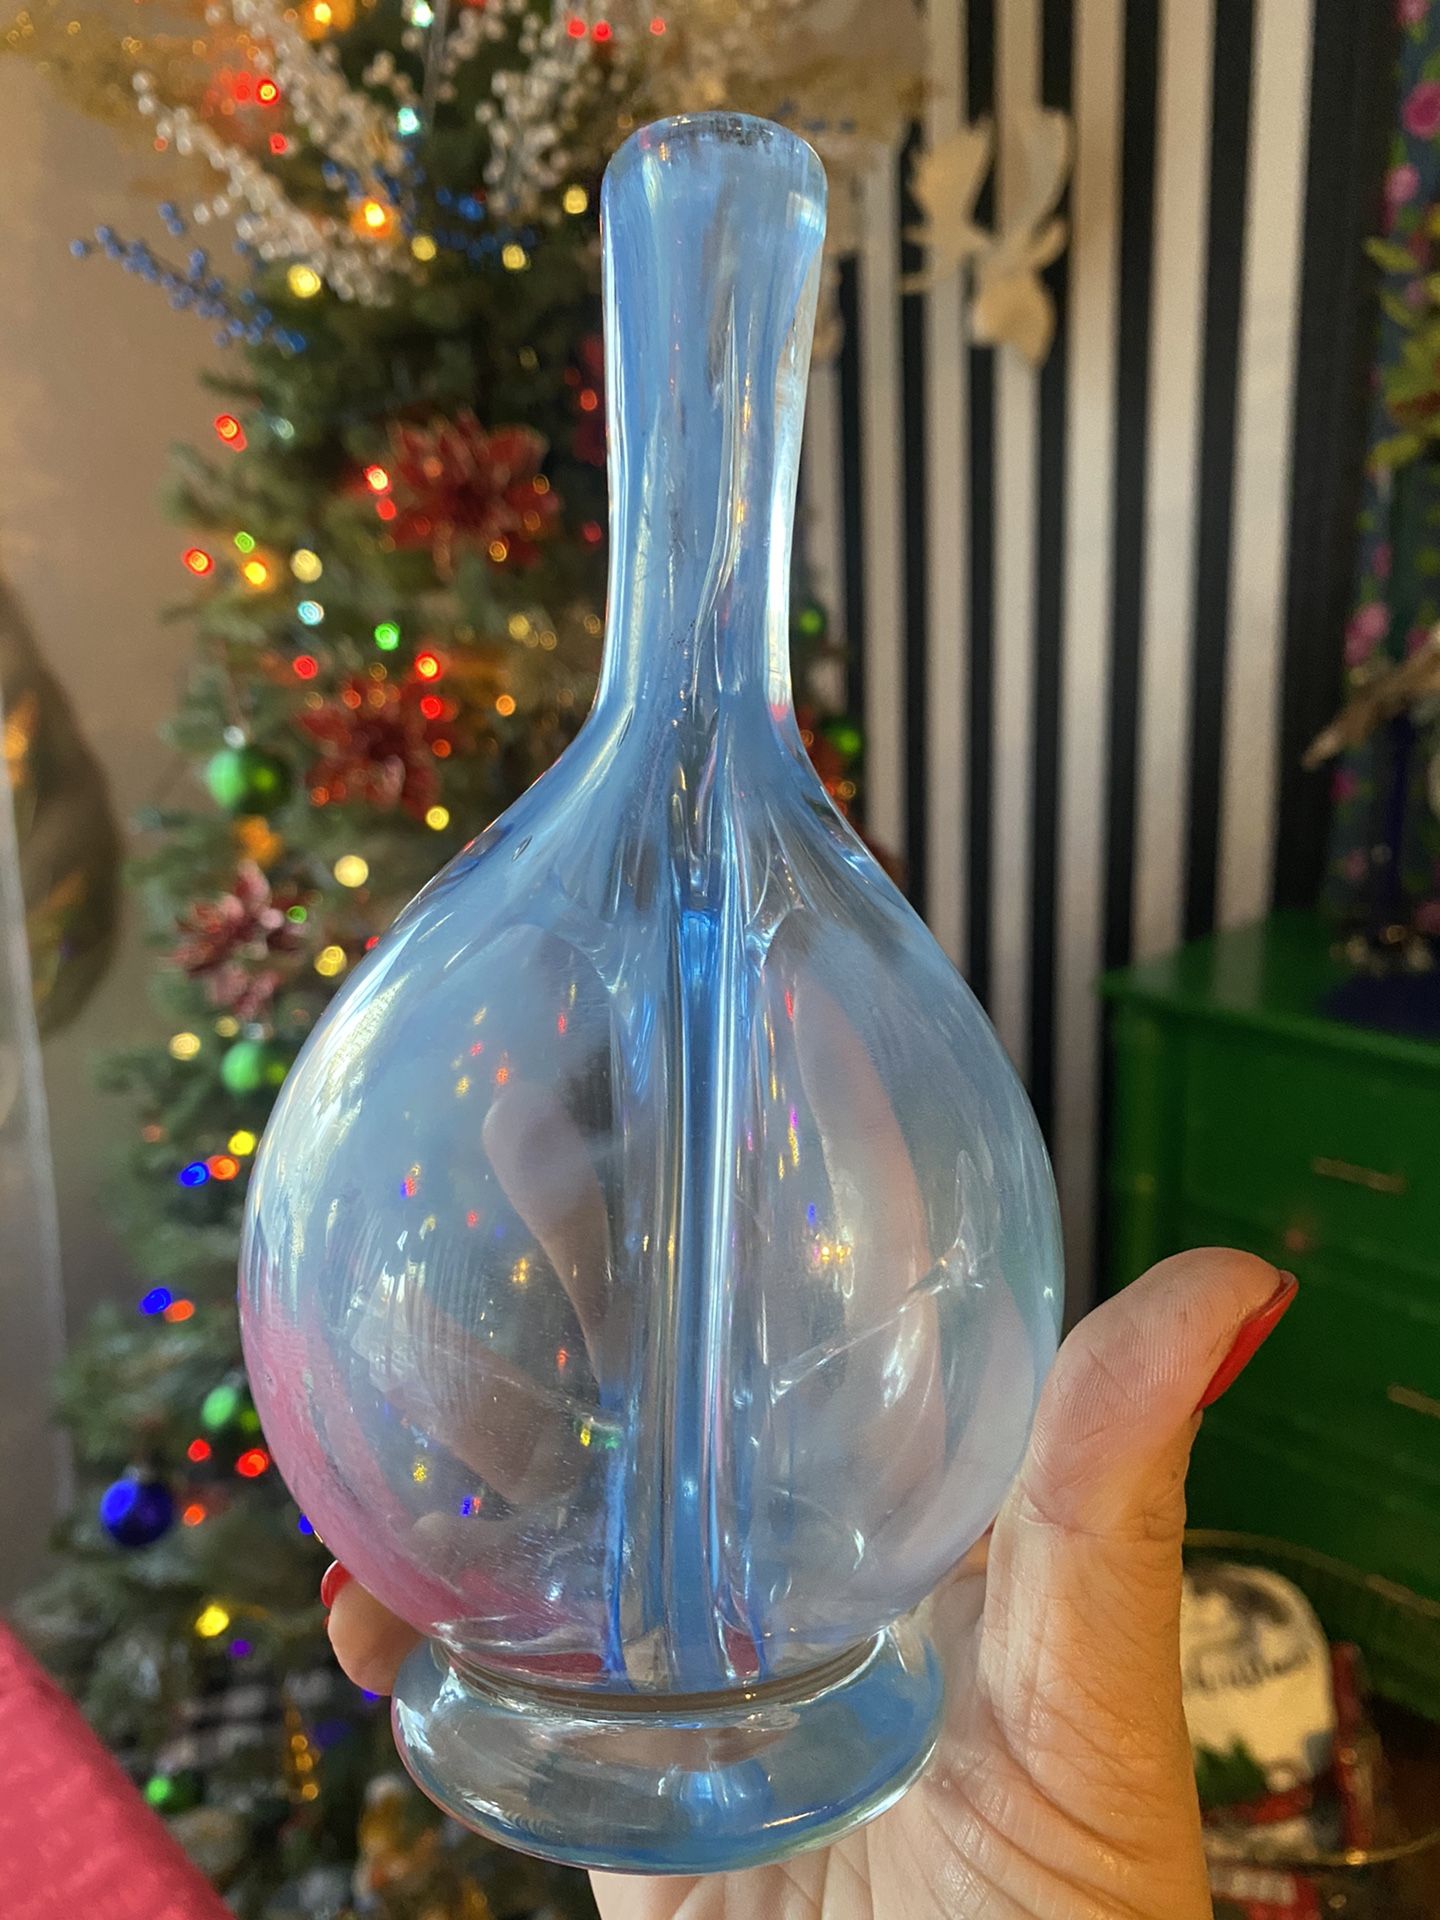 I gave small murano glass vase